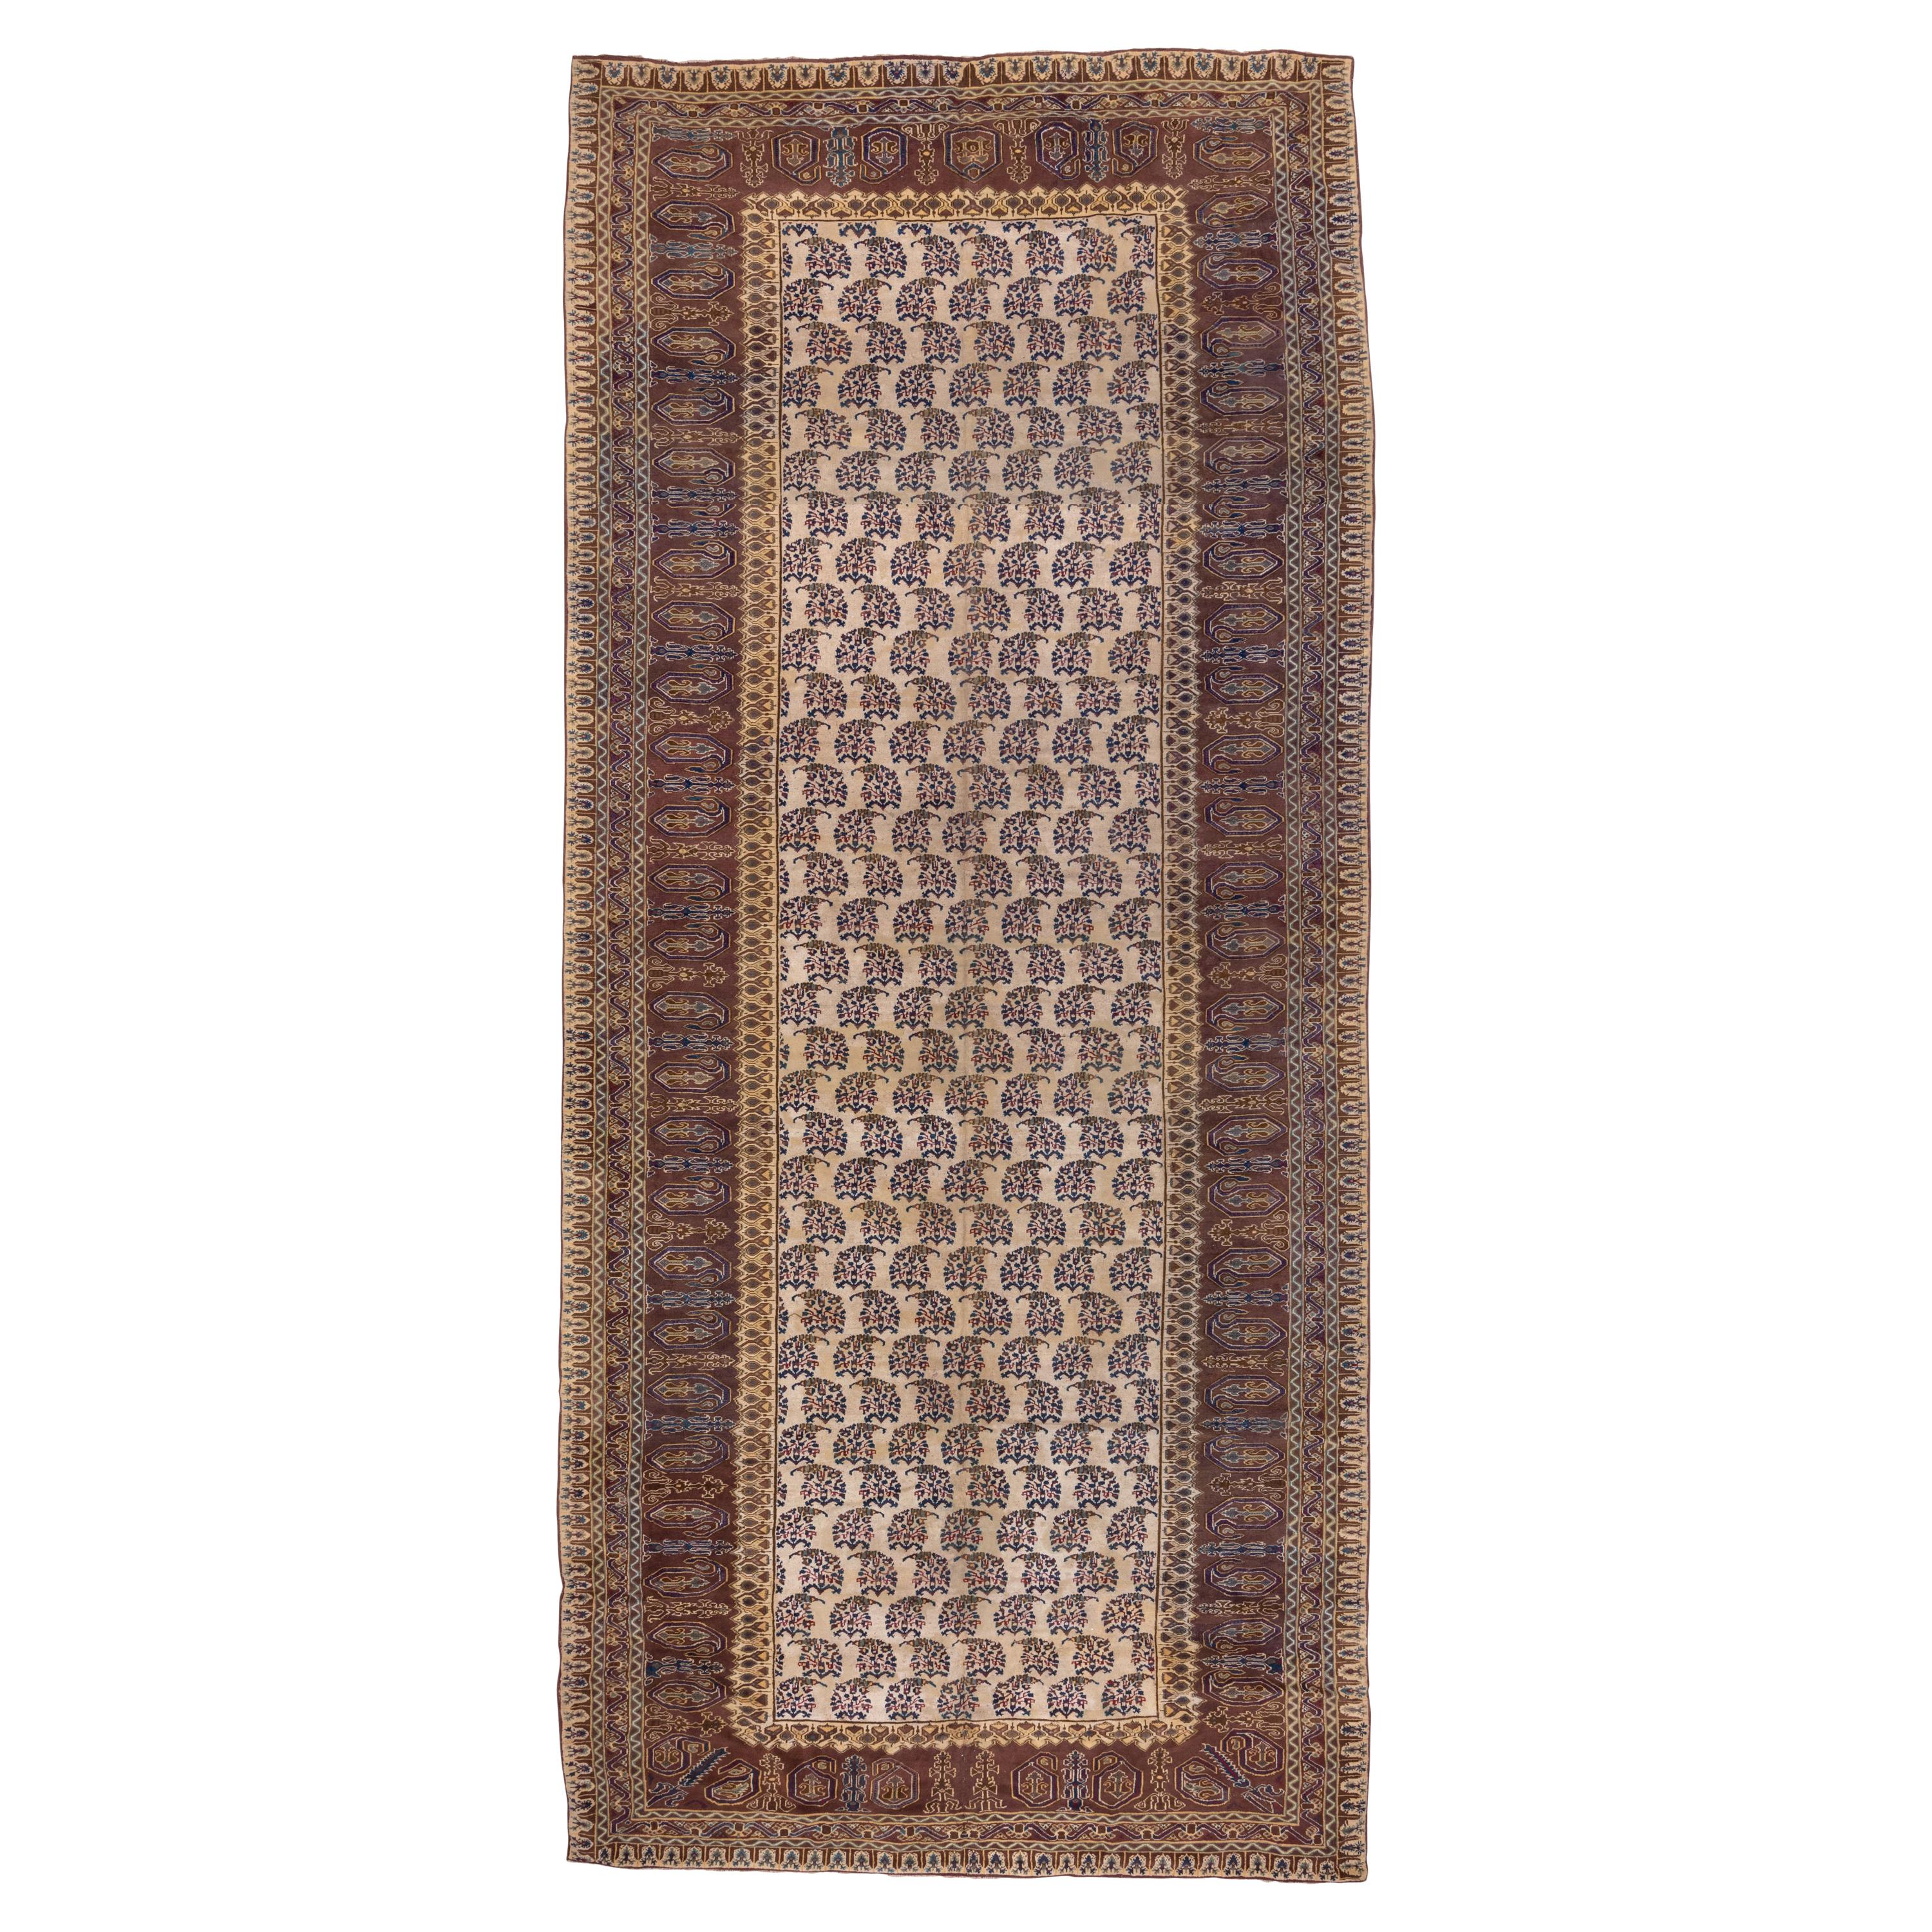 Antique Amritsar Gallery Carpet, circa 1920s, Mansion Length